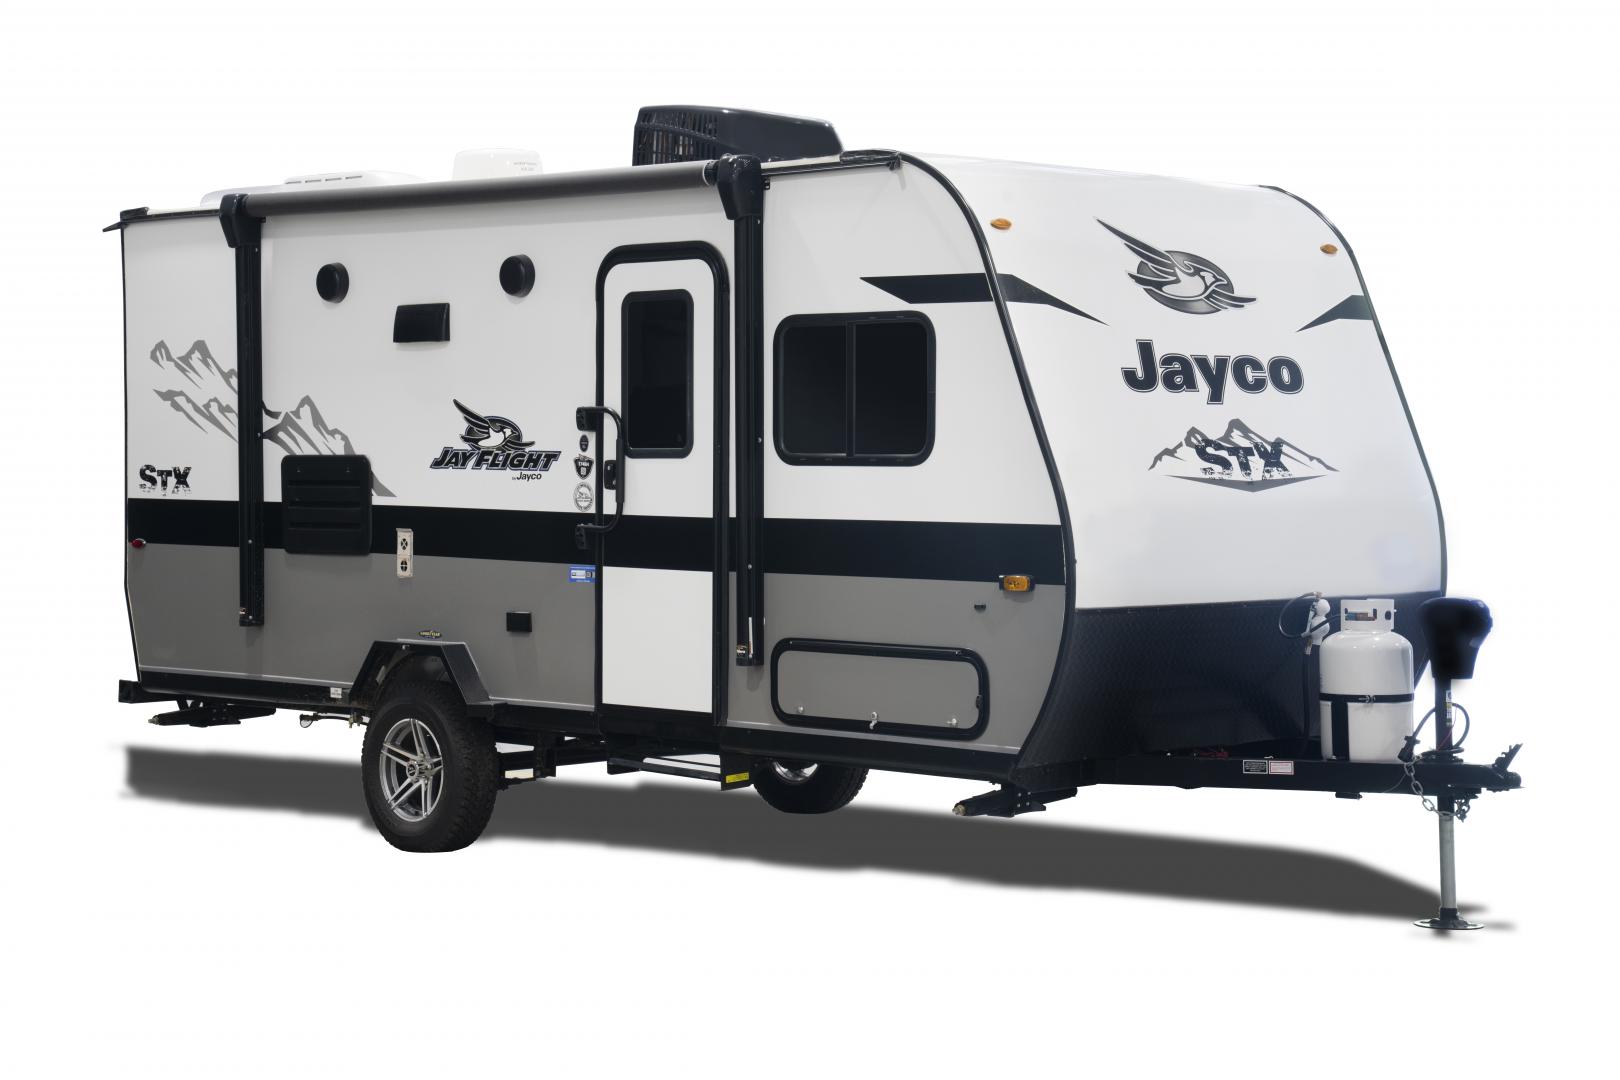 22' jayco travel trailer